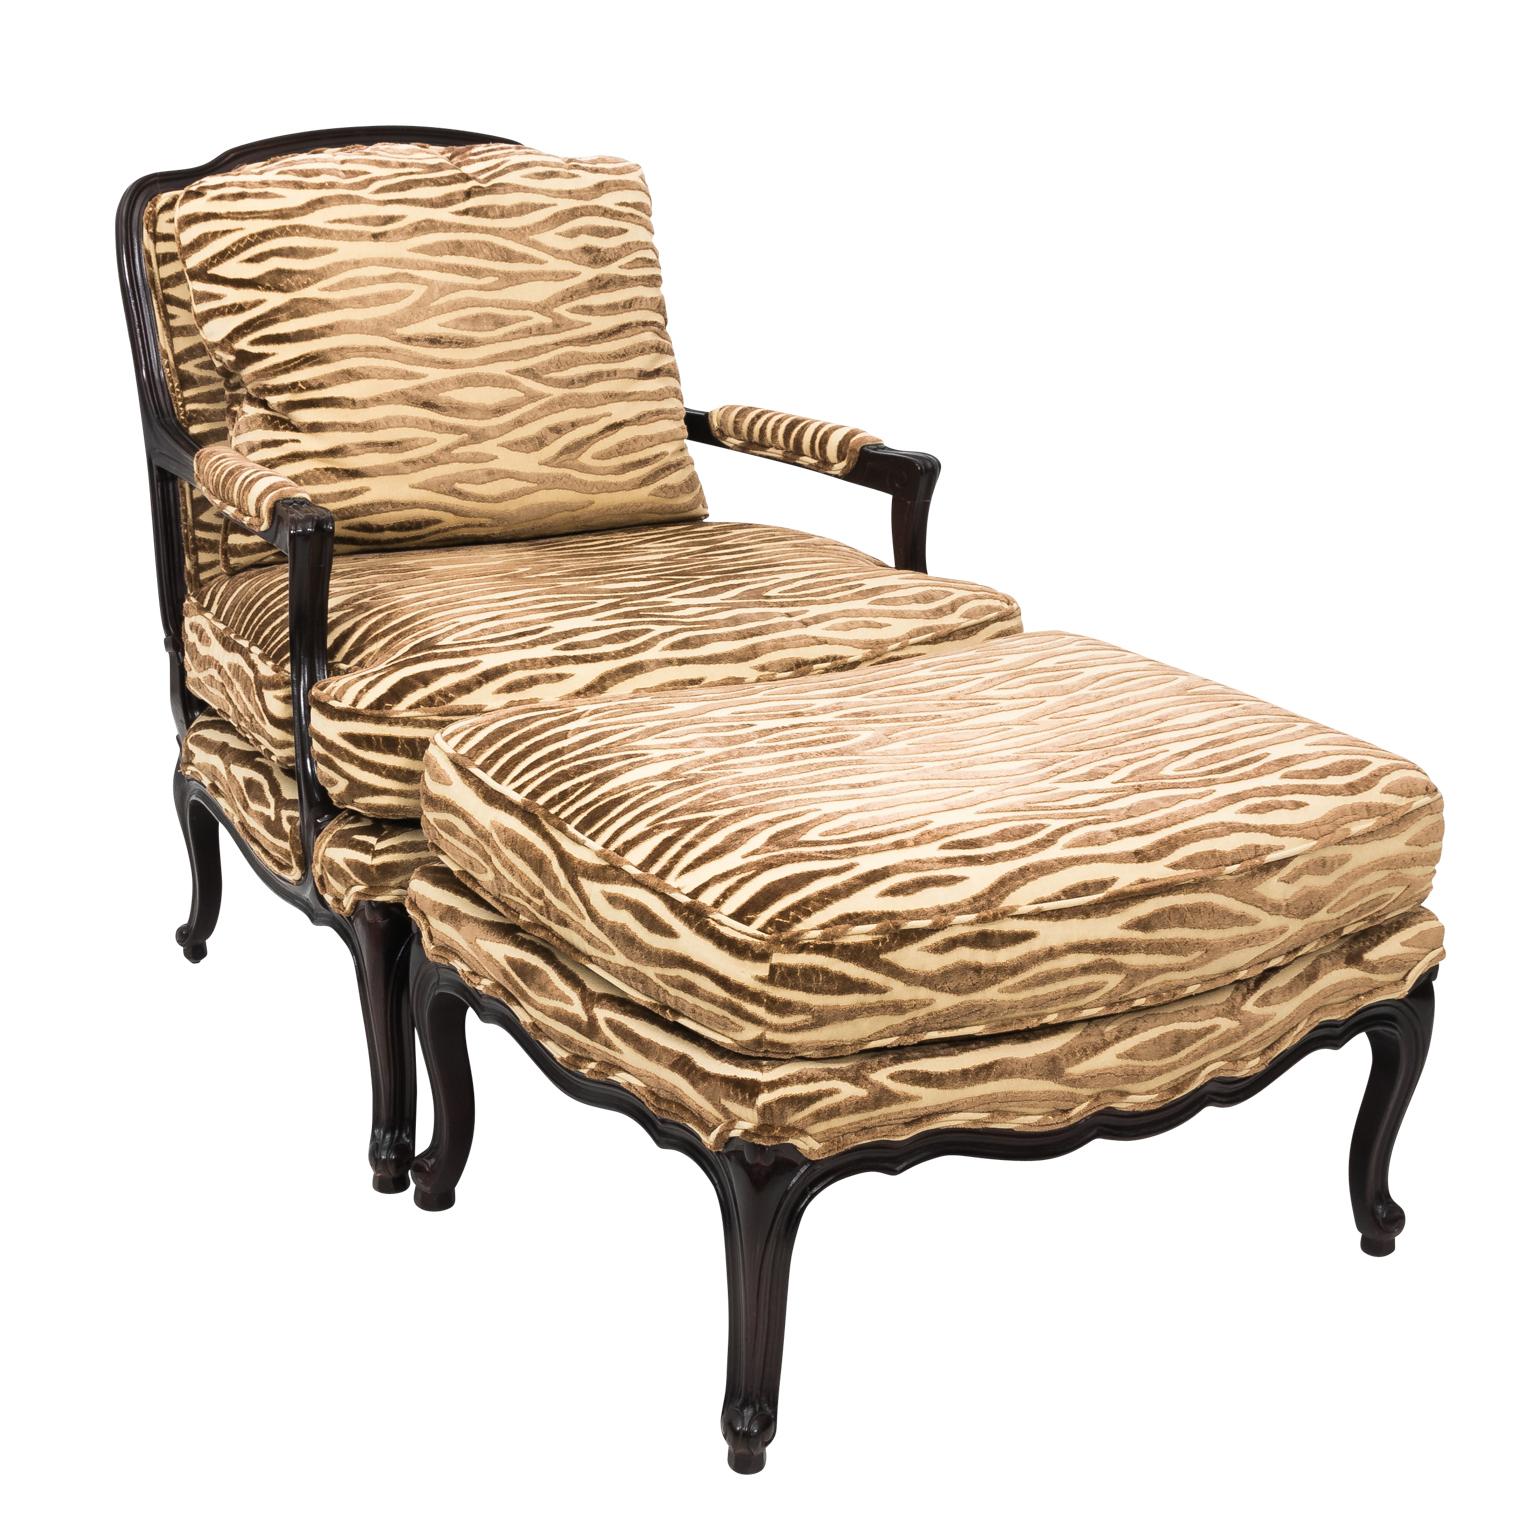 Chair Plus Ottoman For Sale